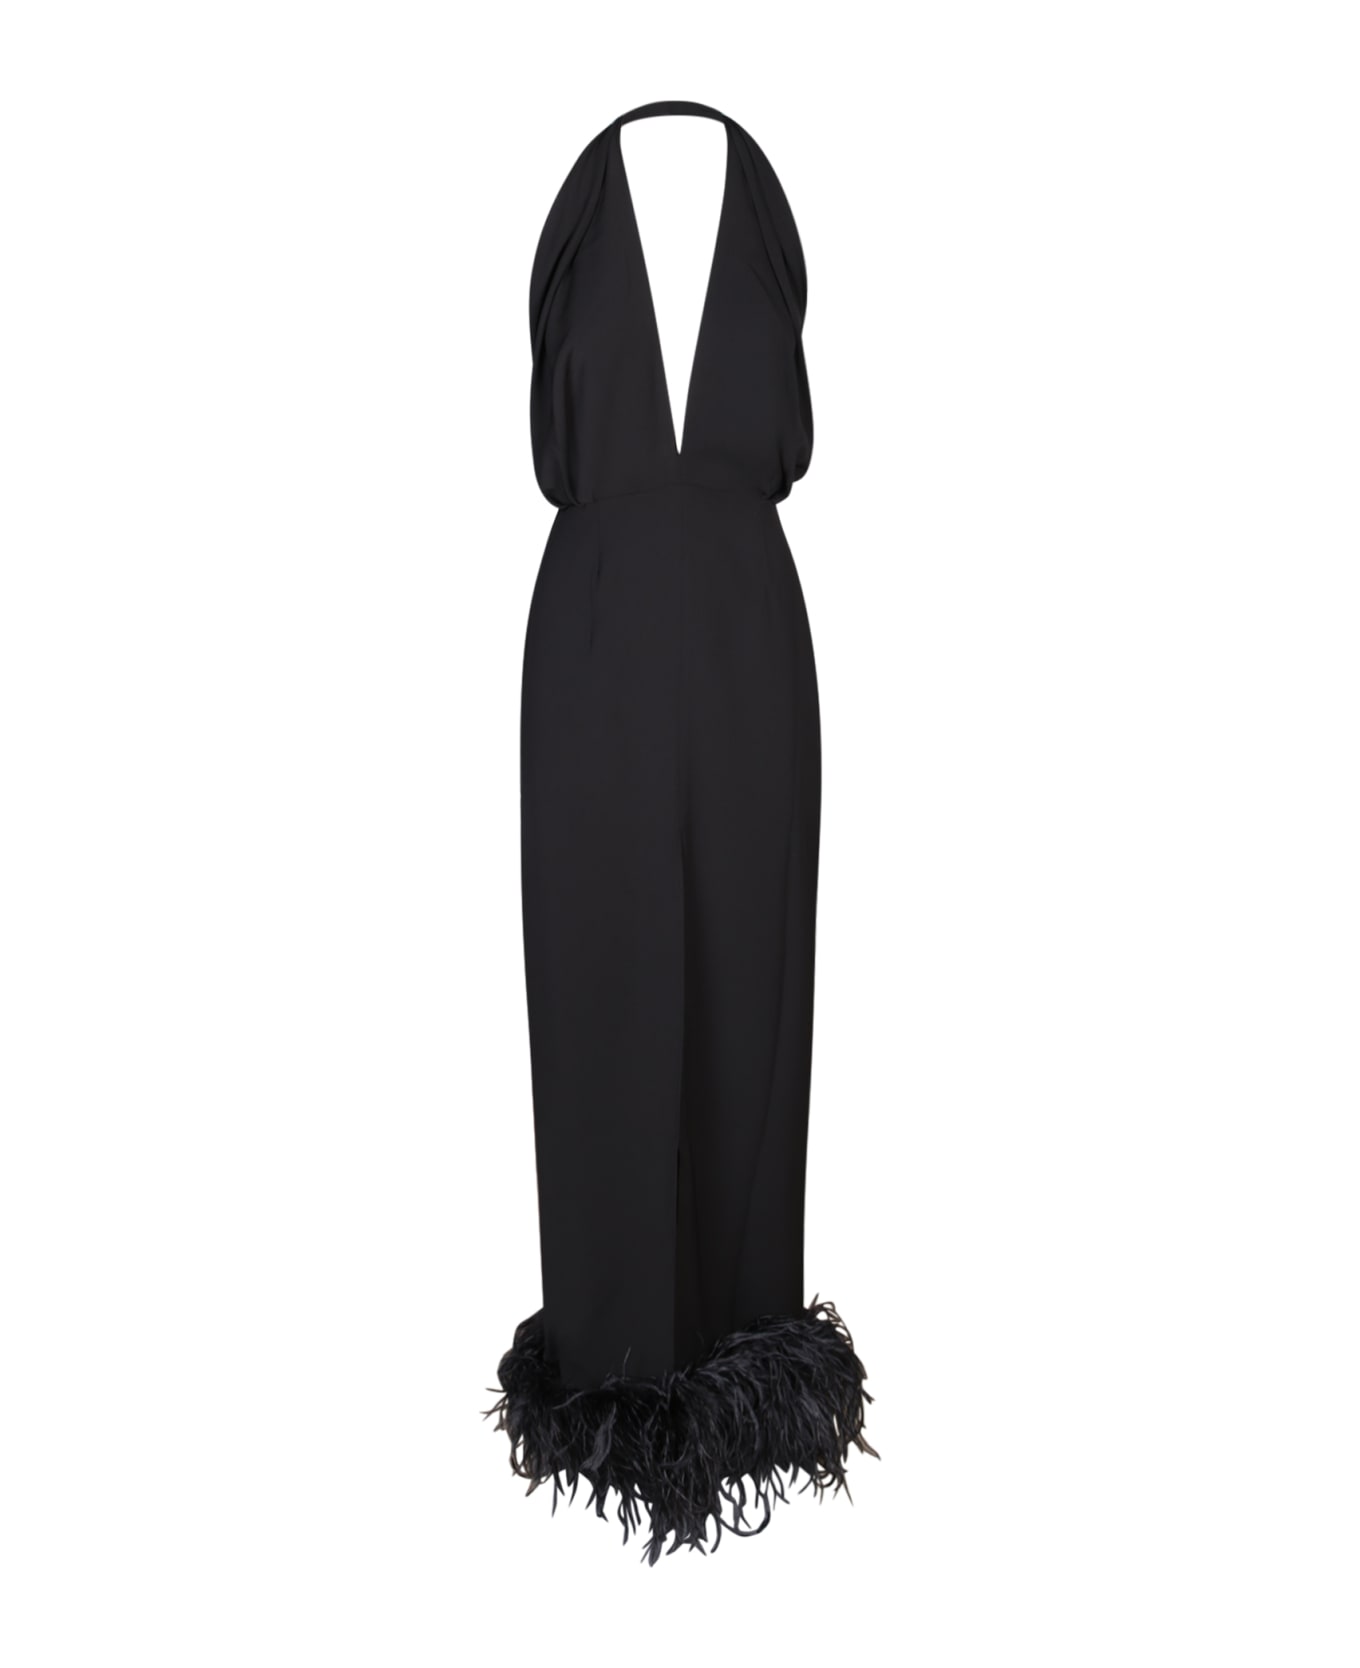 16arlington Isolde Black Dress - Black